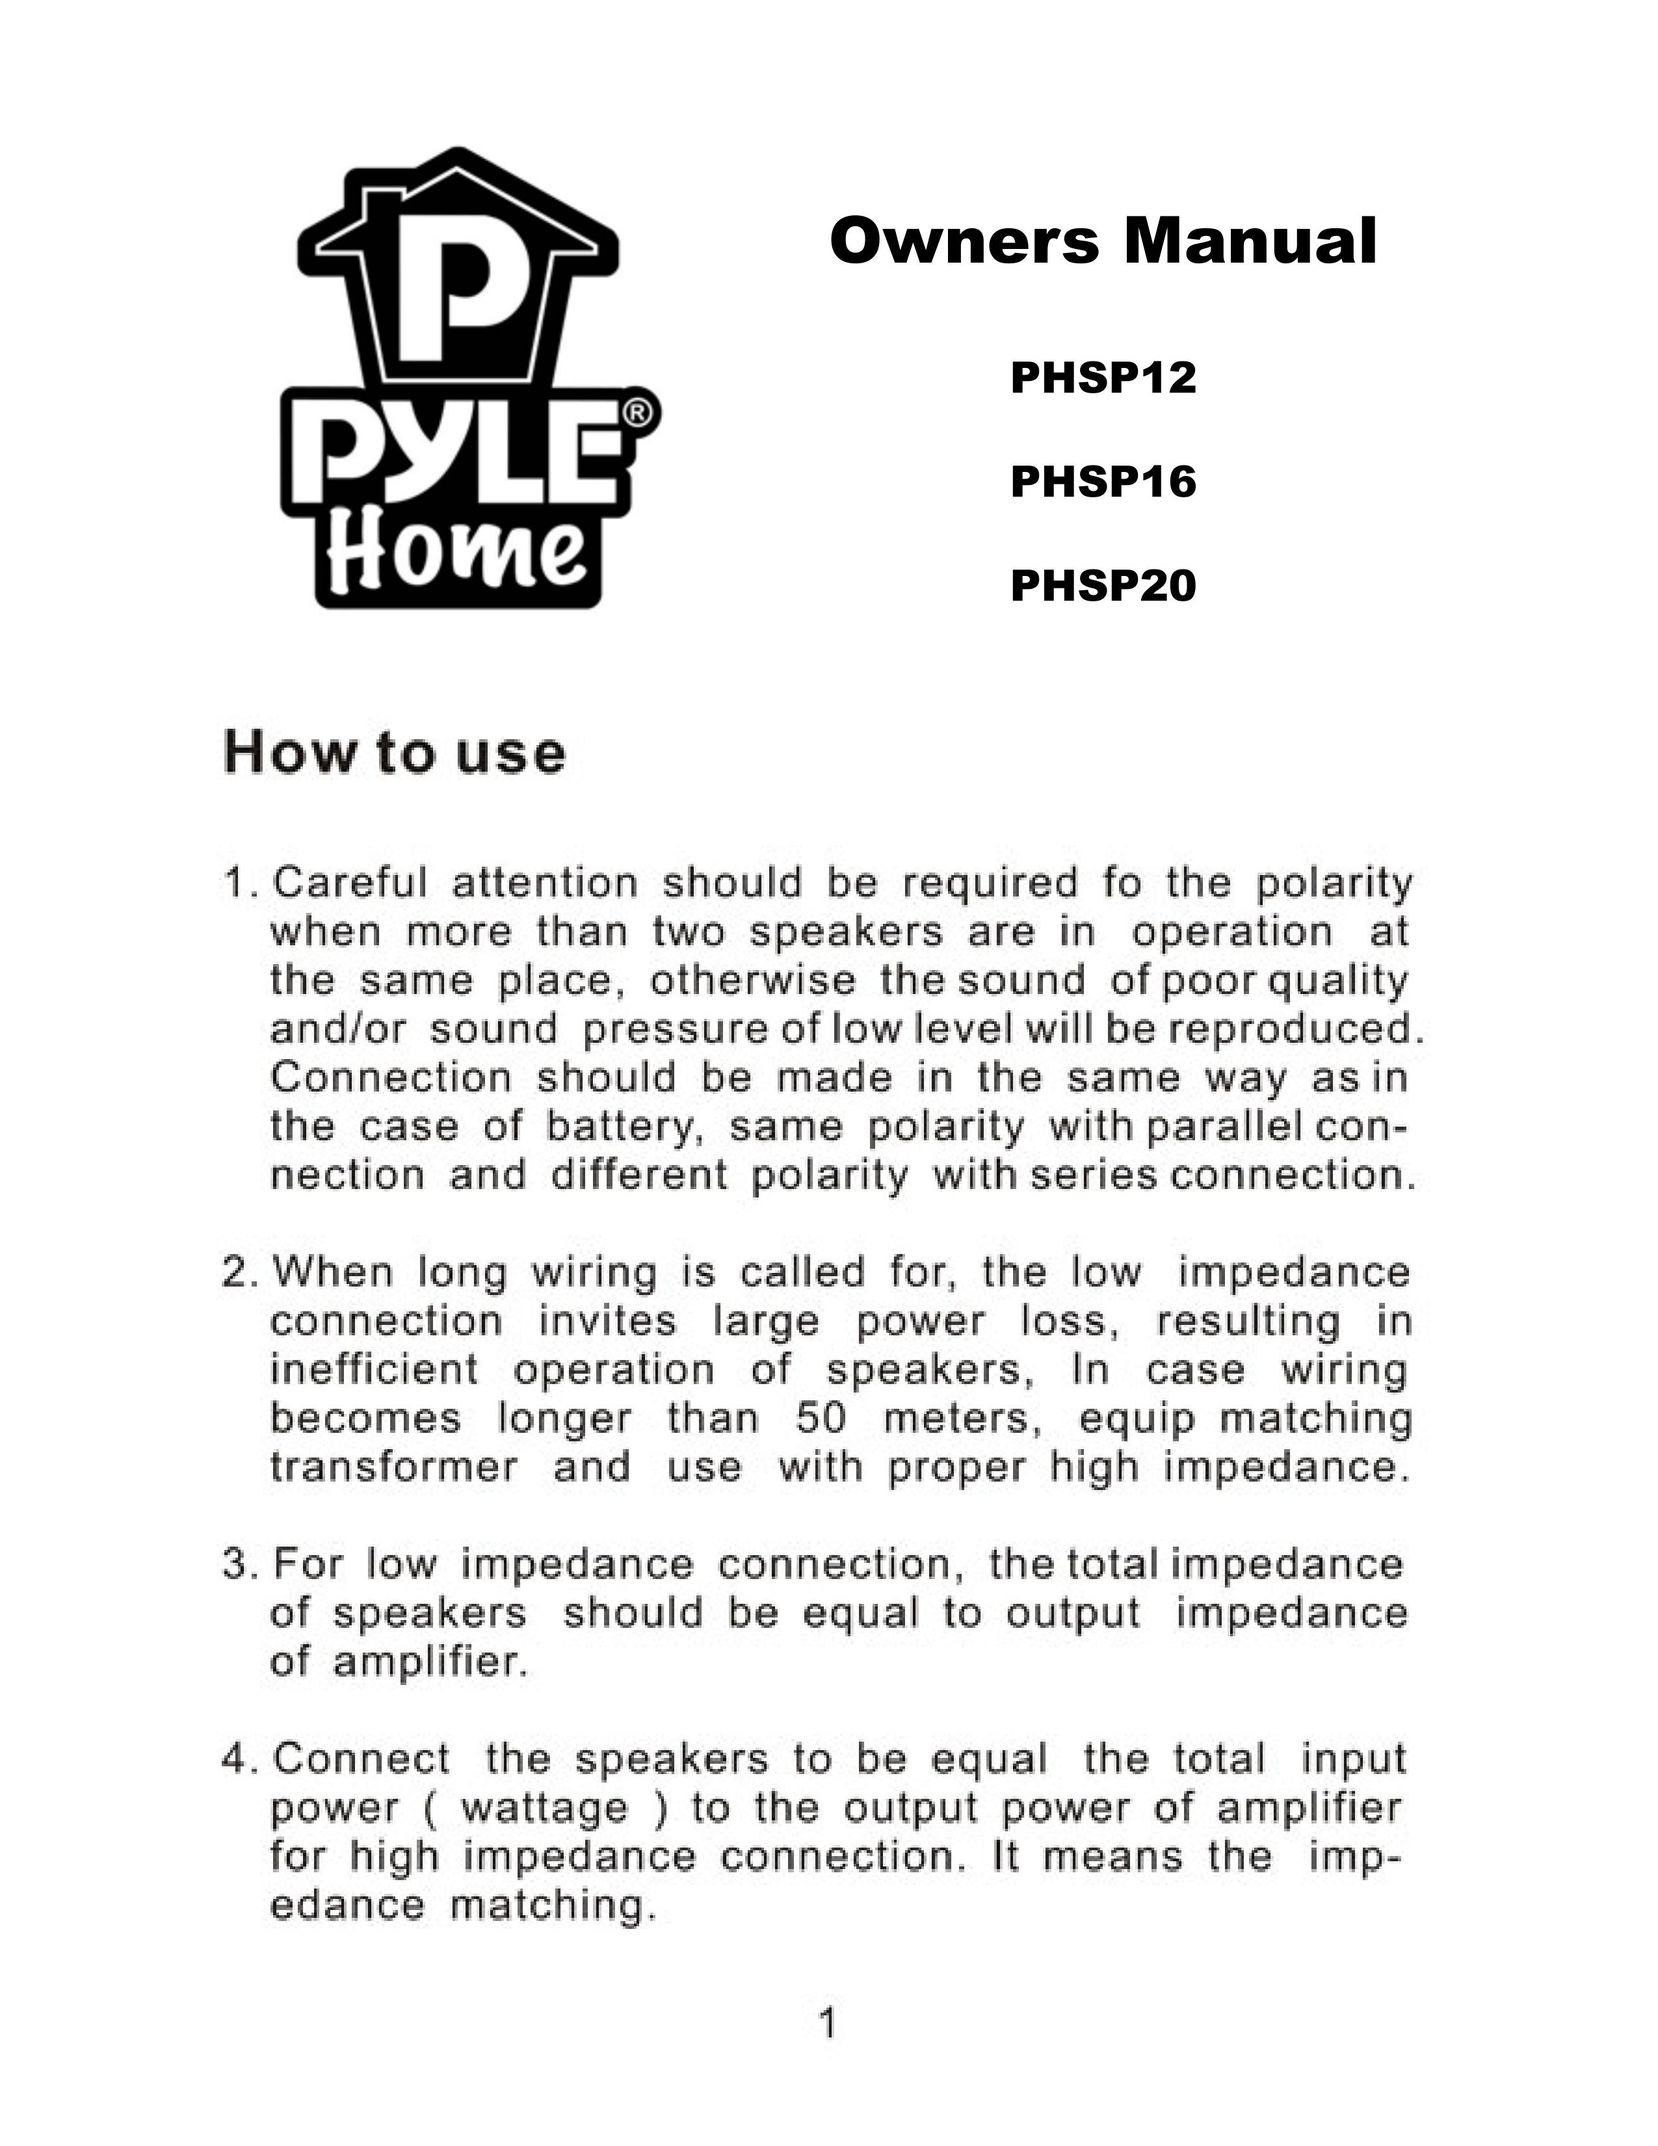 PYLE Audio PHSP16 Speaker System User Manual